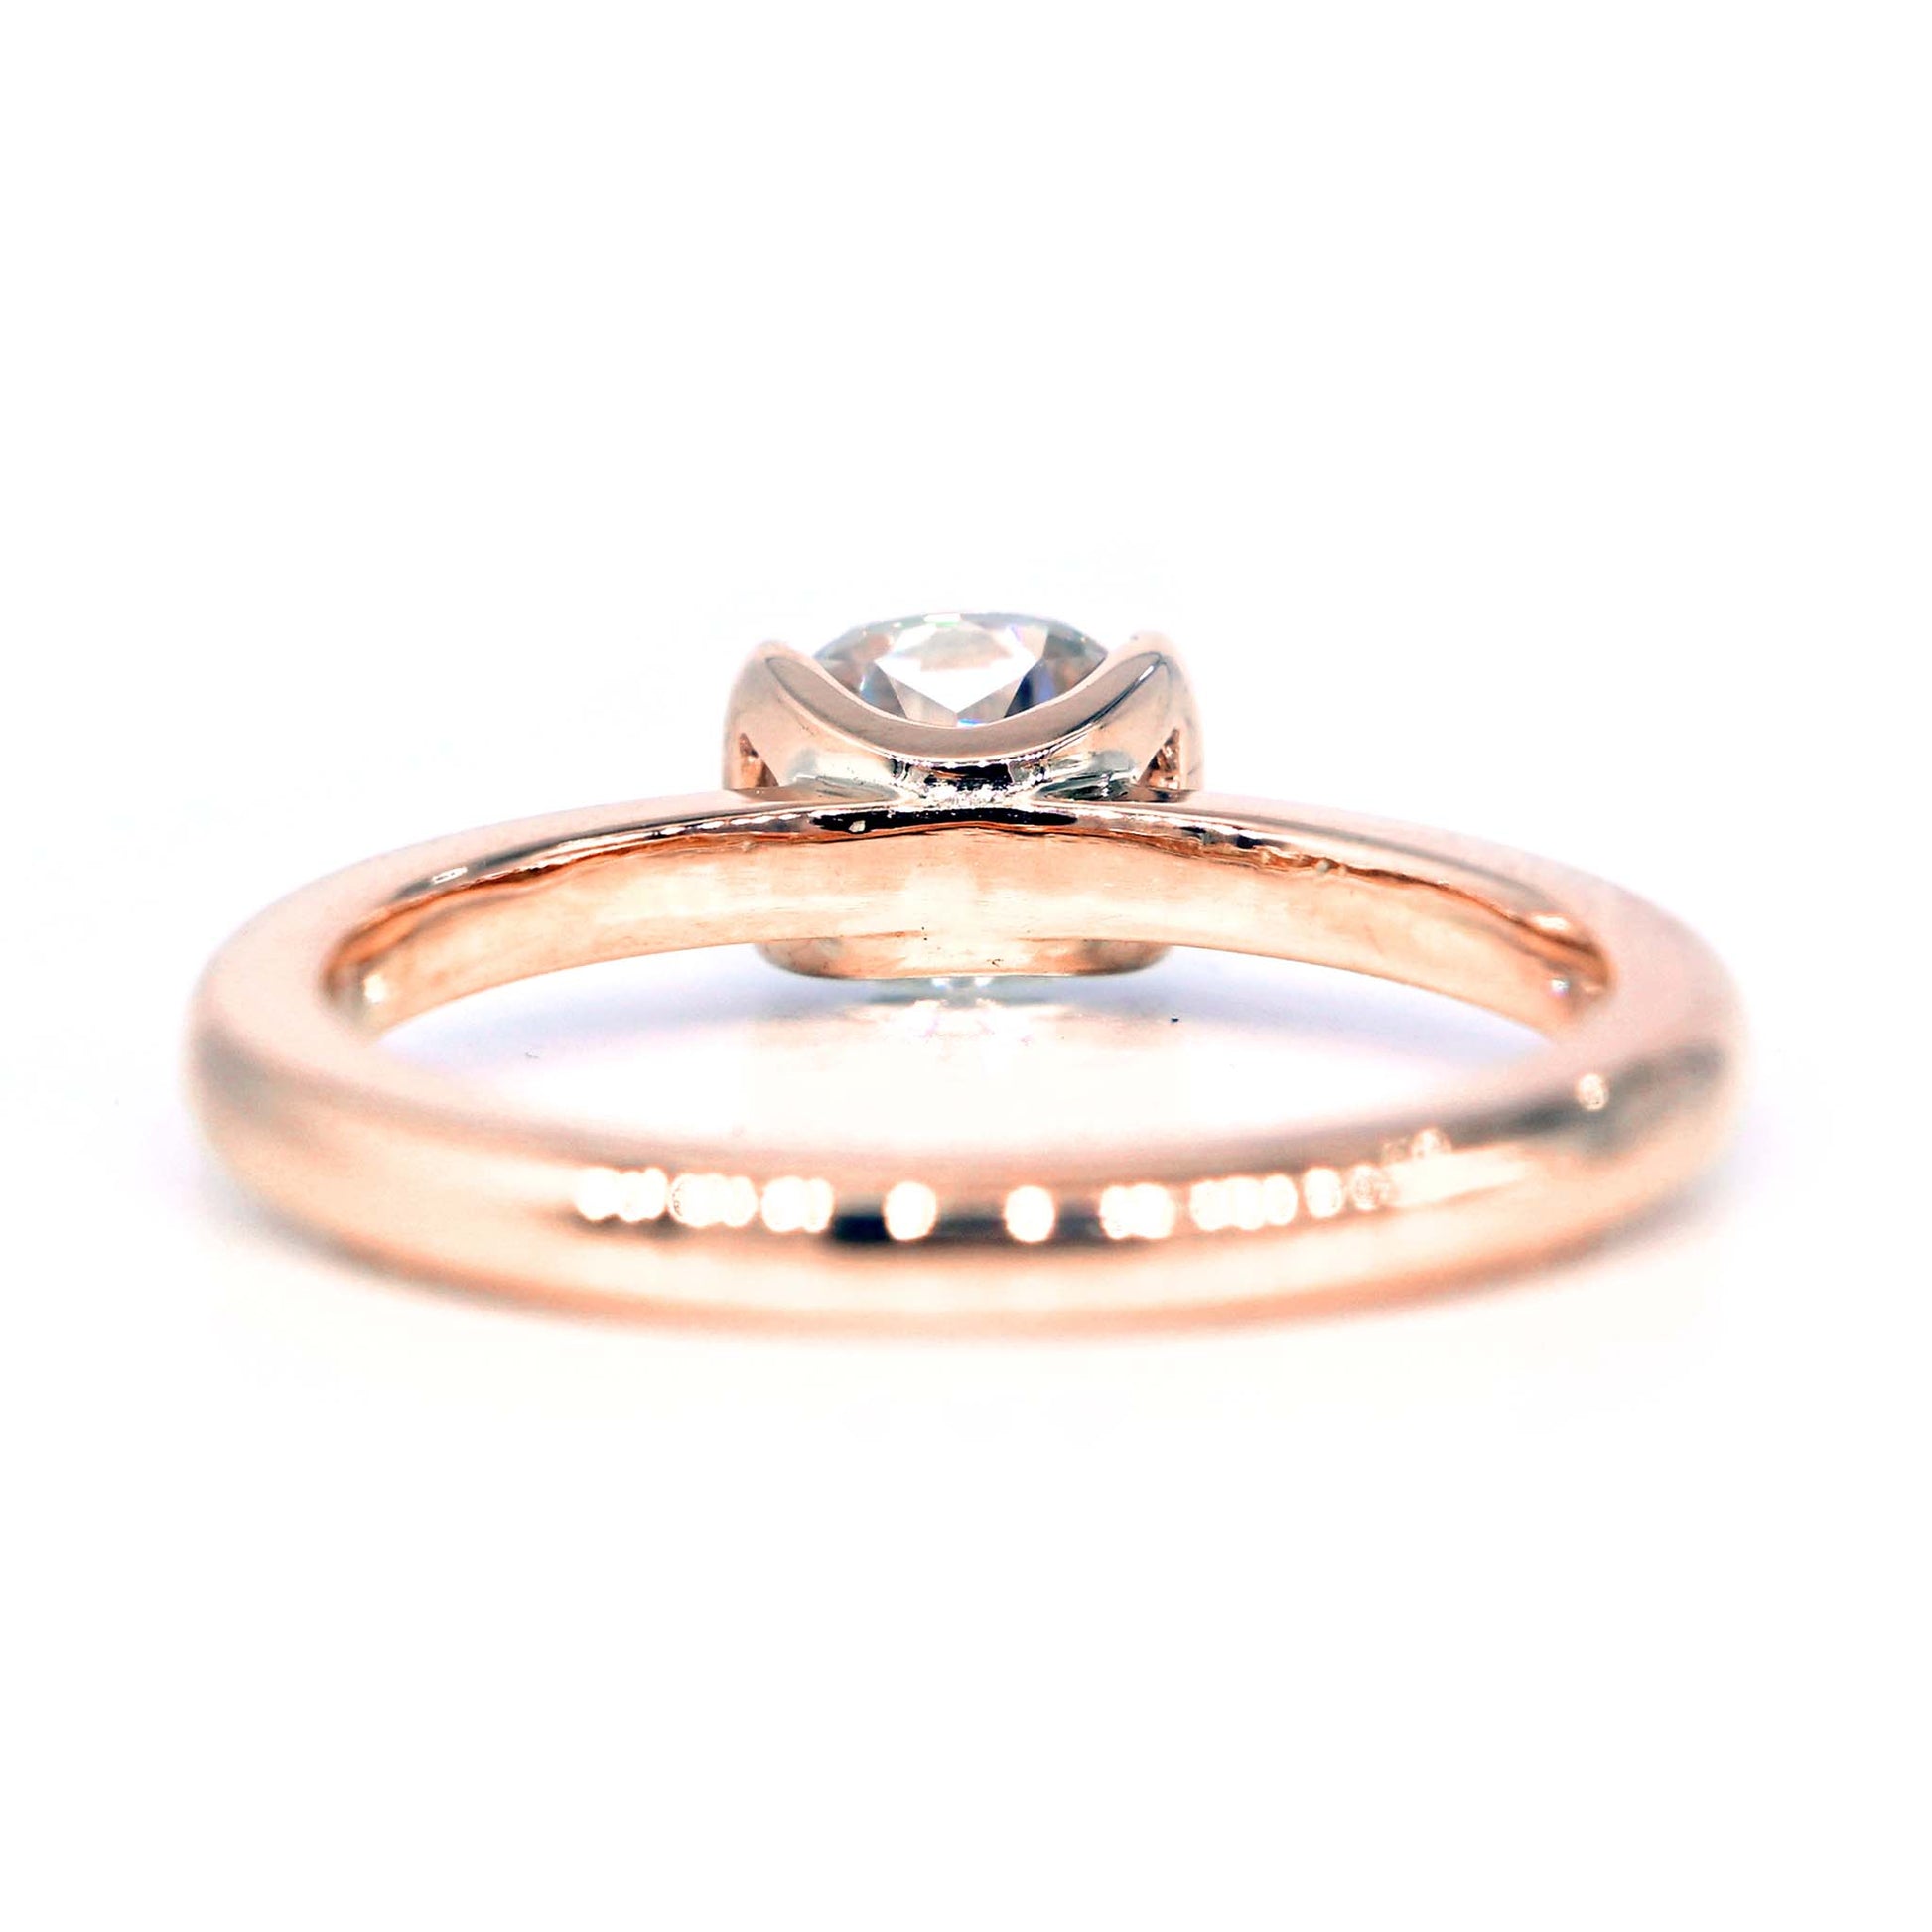 Cushion engagement handmade ring in 14k romantic rosegold